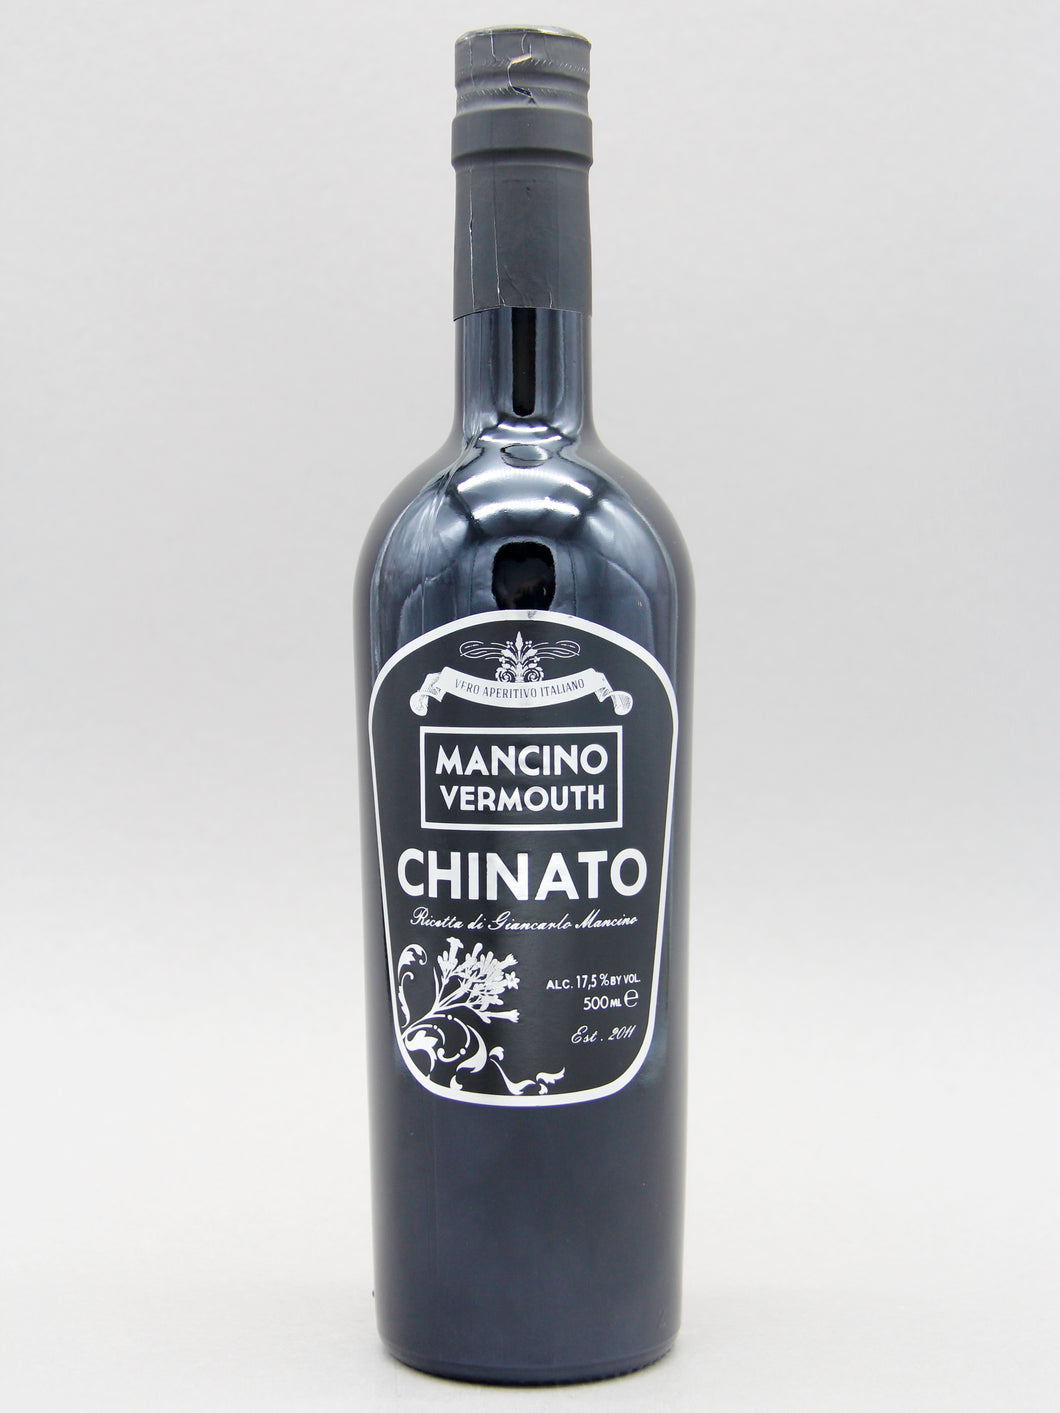 Mancino Vermouth, Chinato, Italy (17.5%, 50cl)